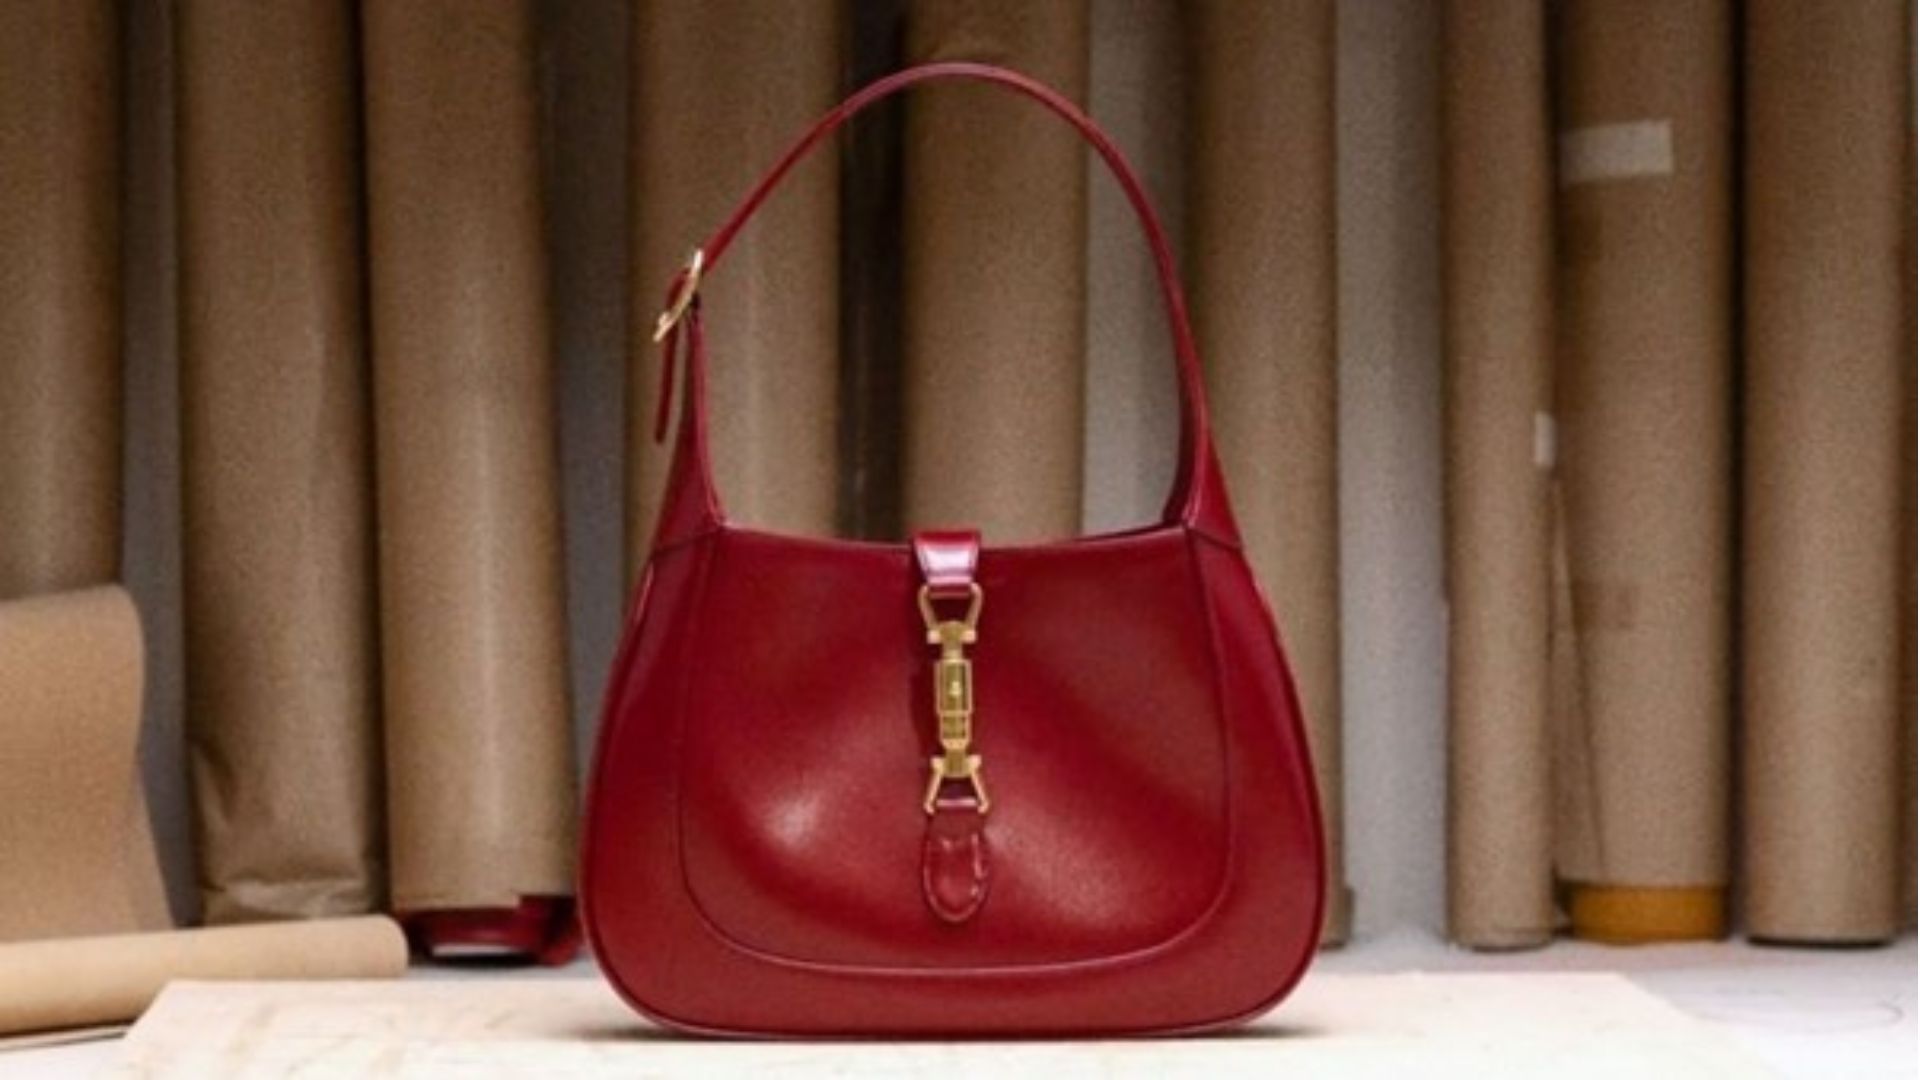 Iconic Hermès, Gucci and Fendi luxury handbags join Hong Kong